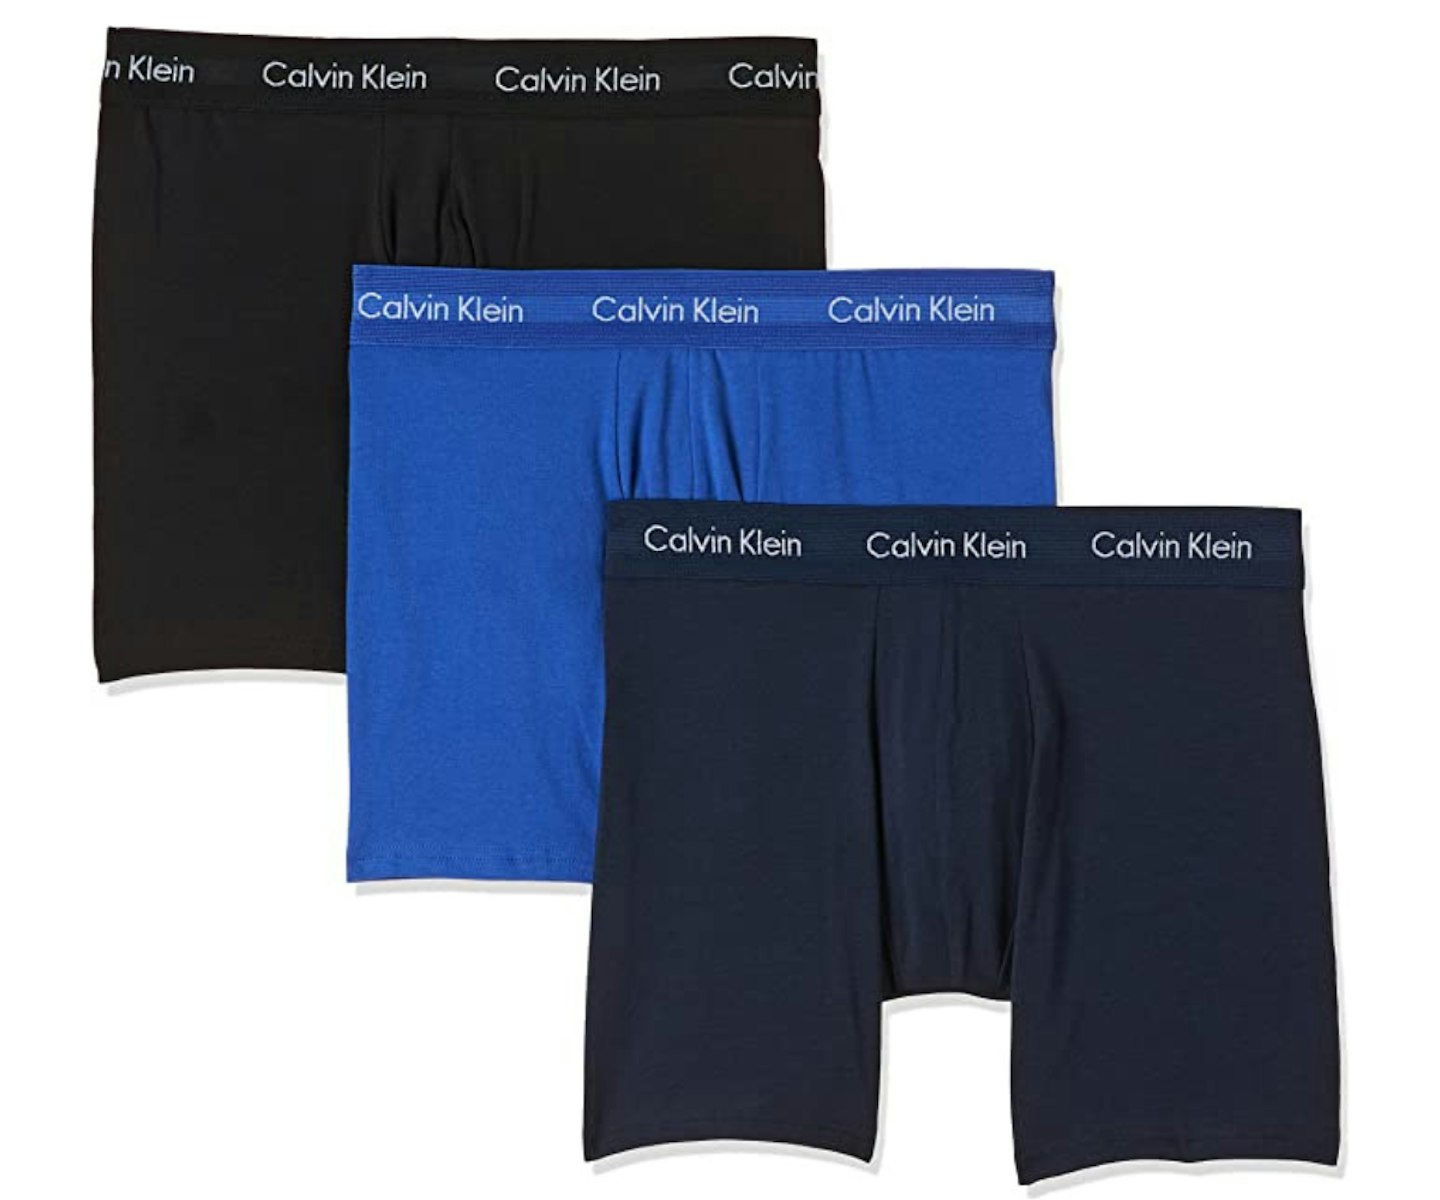 Calvin Klein Men's Boxers - 3 pck